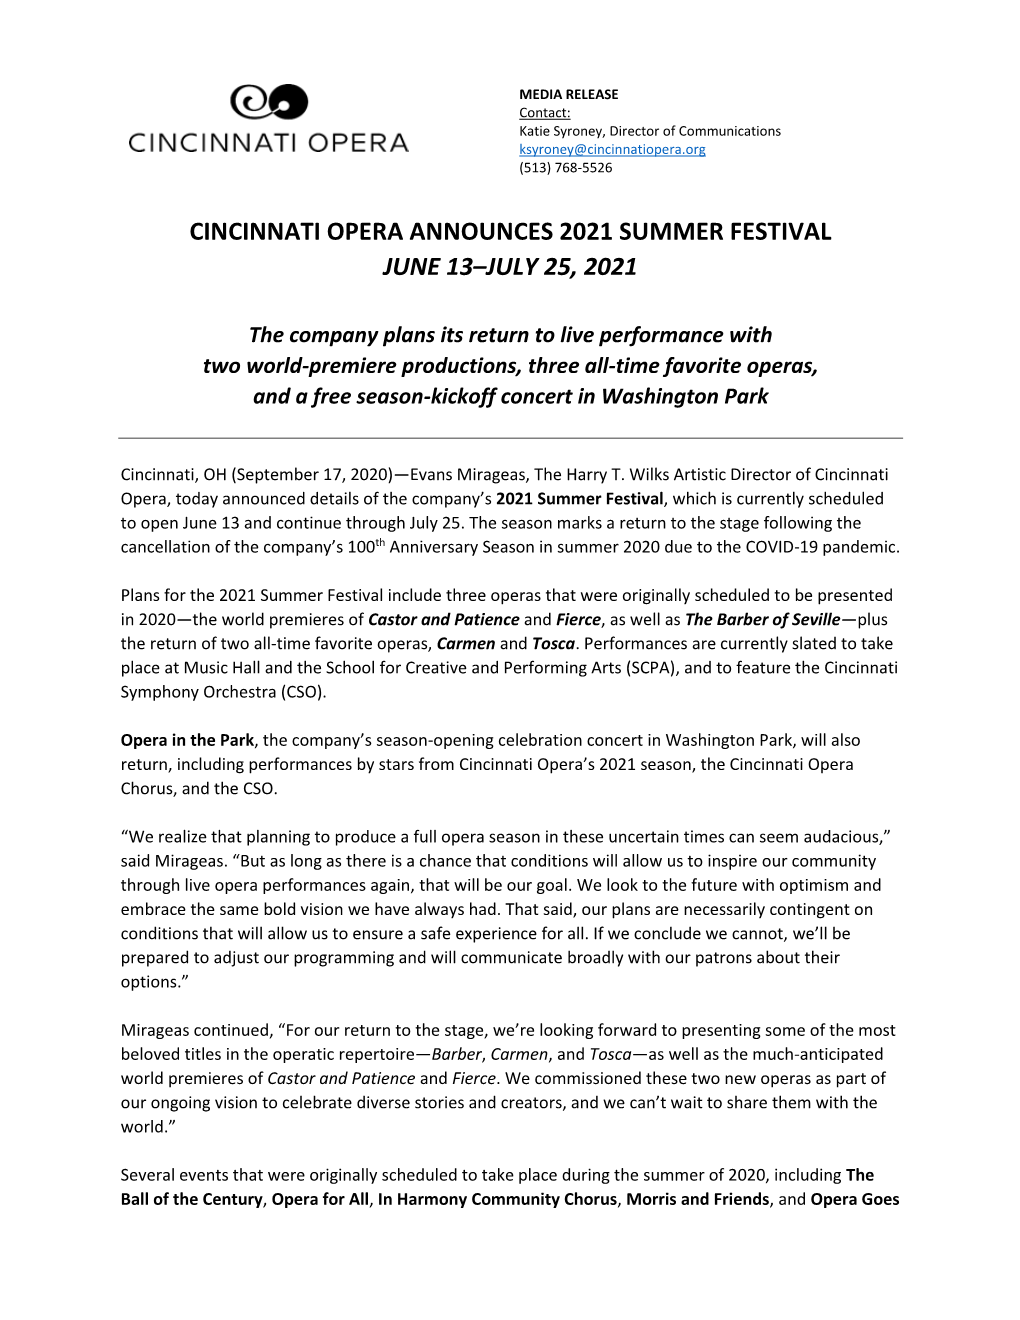 Cincinnati Opera Announces 2021 Summer Festival June 13–July 25, 2021